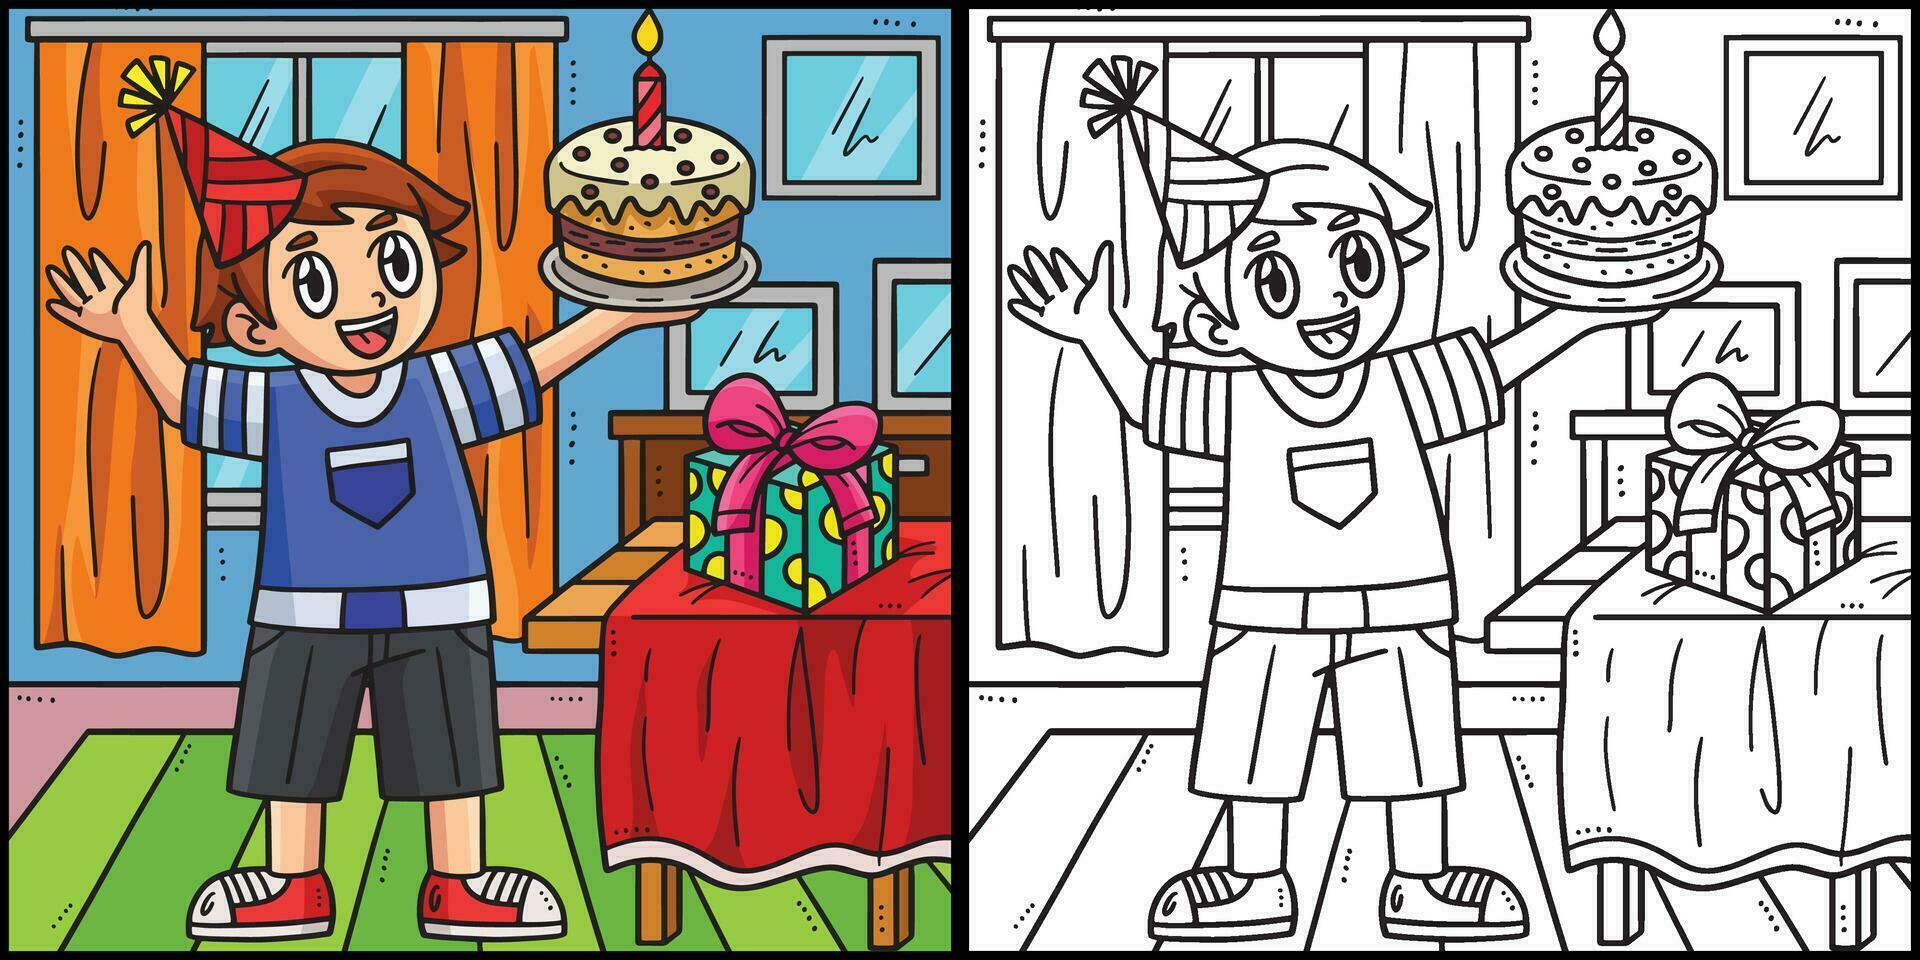 födelsedag pojke innehav en kaka färg illustration vektor